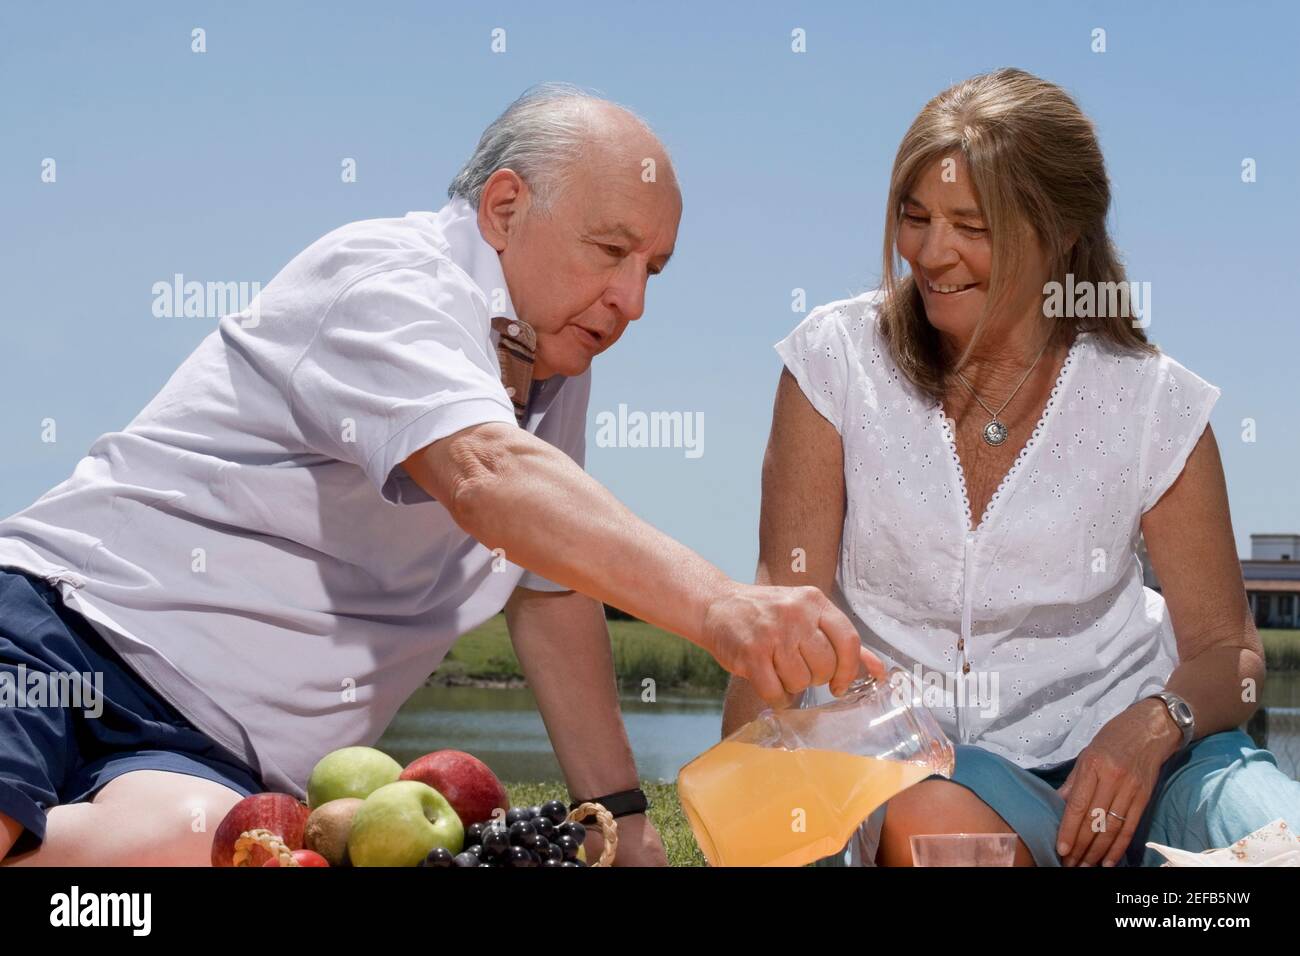 Senior couple at picnic Stock Photo